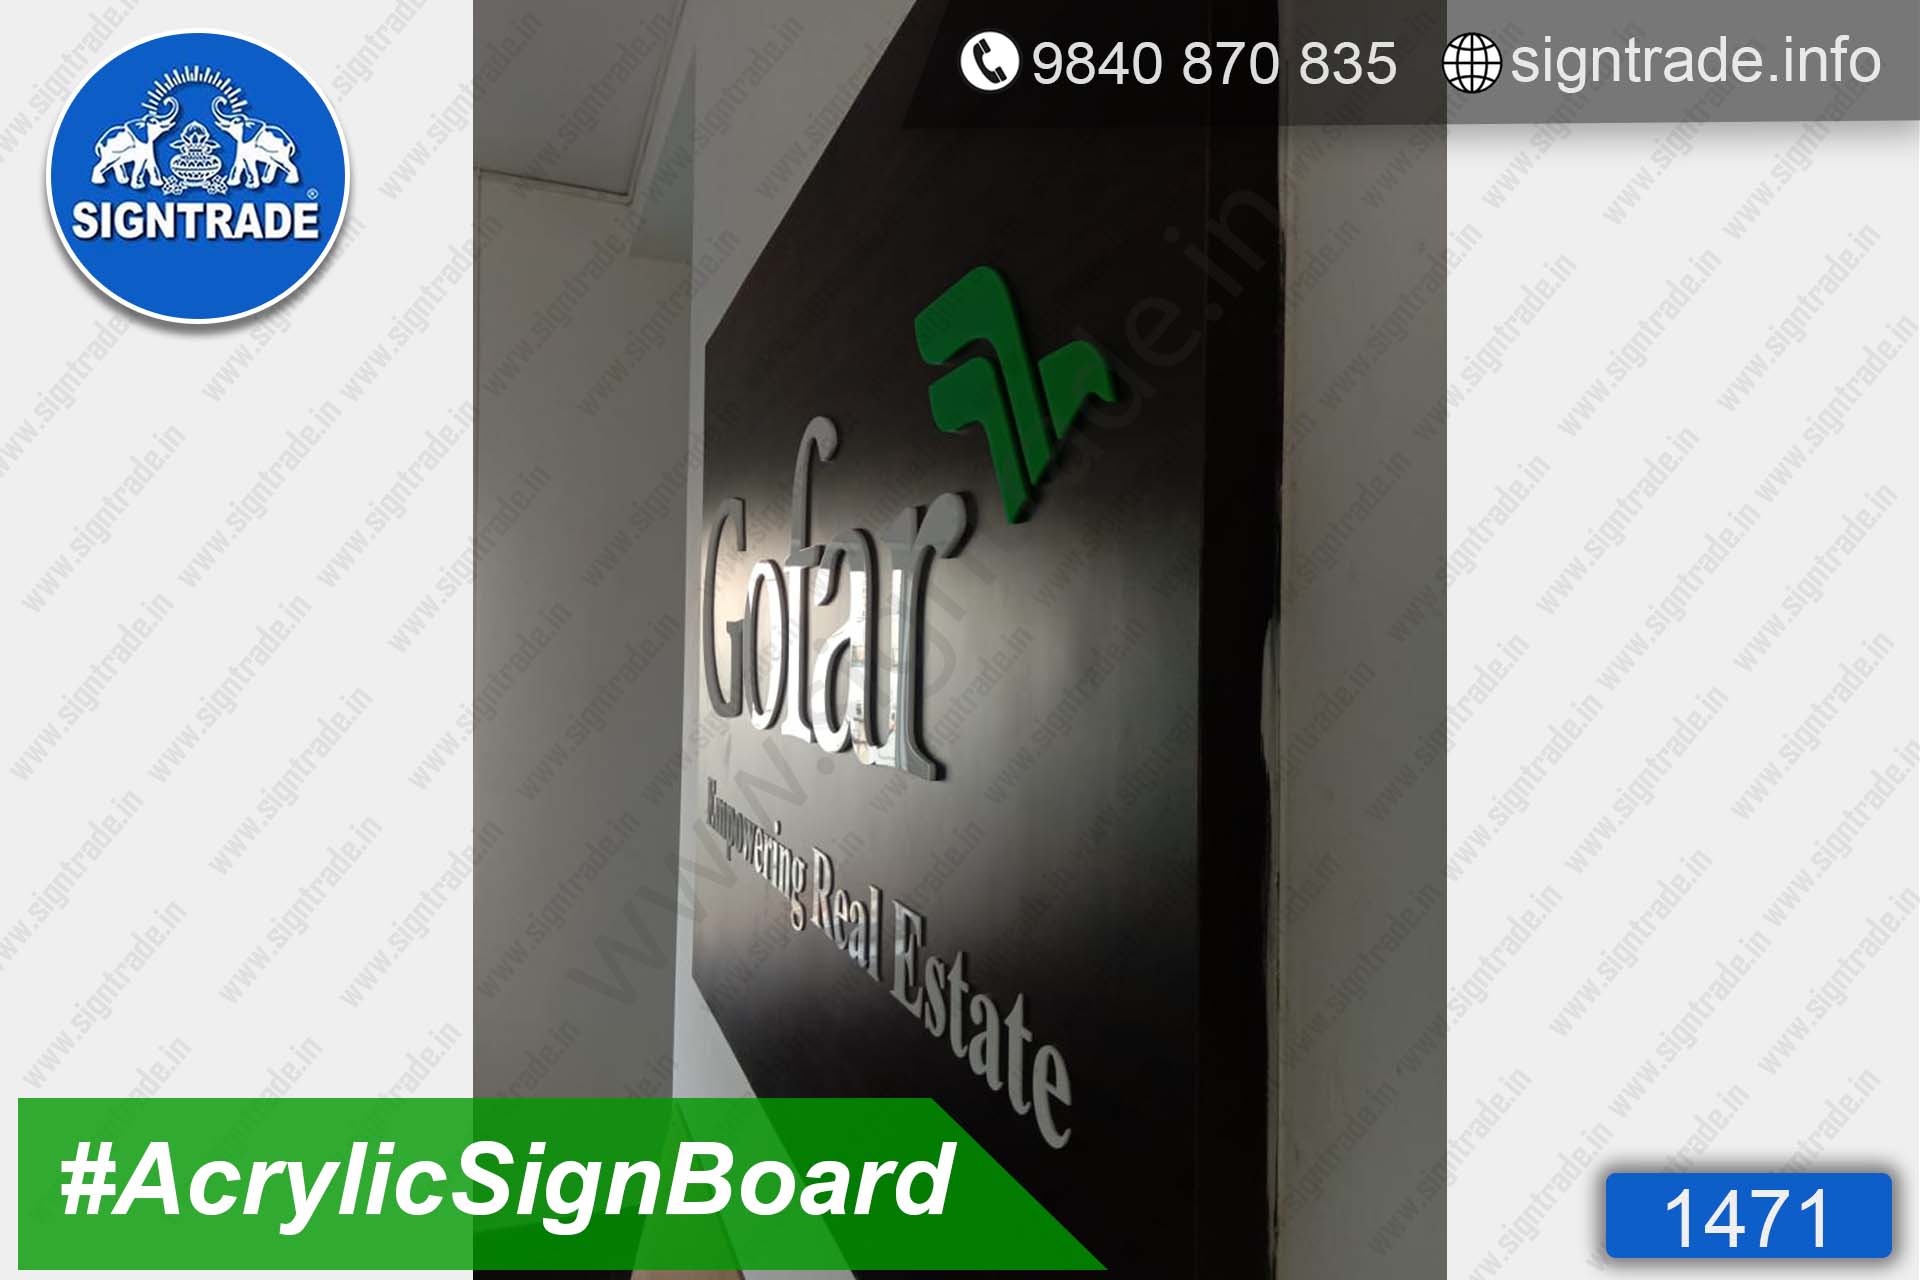 Gofar Empowering Real Estate - Acrylic Letter Sign Board - SIGNTRADE - Acrylic Letter Sign Board Manufacture in Chennai